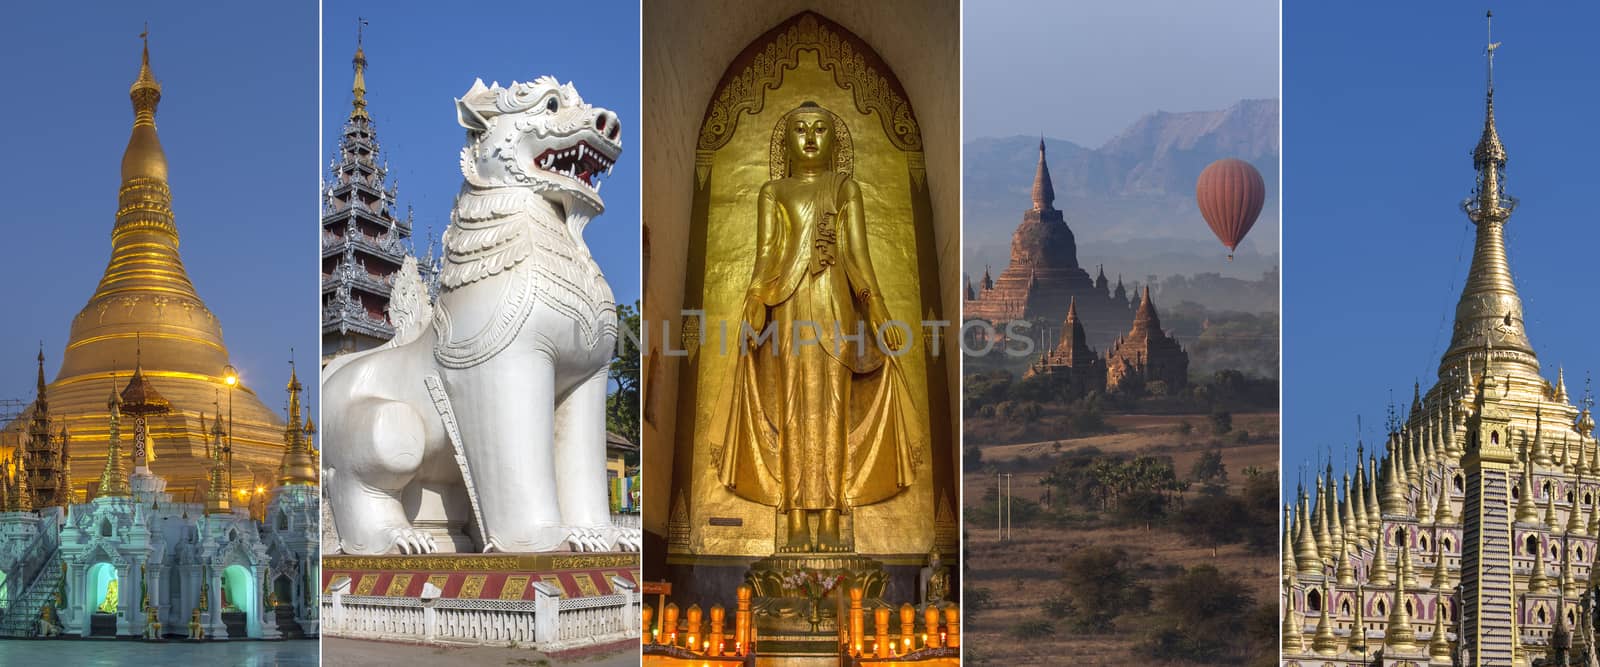 Sights of Myanmar (Burma) - Shwedagon Pagoda, Entrance to Mandalay Hill, Buddha in Ananda Temple, Hot Air Balloon in Bagan and the Mohnyin Thambuddhei Paya in Monywa.